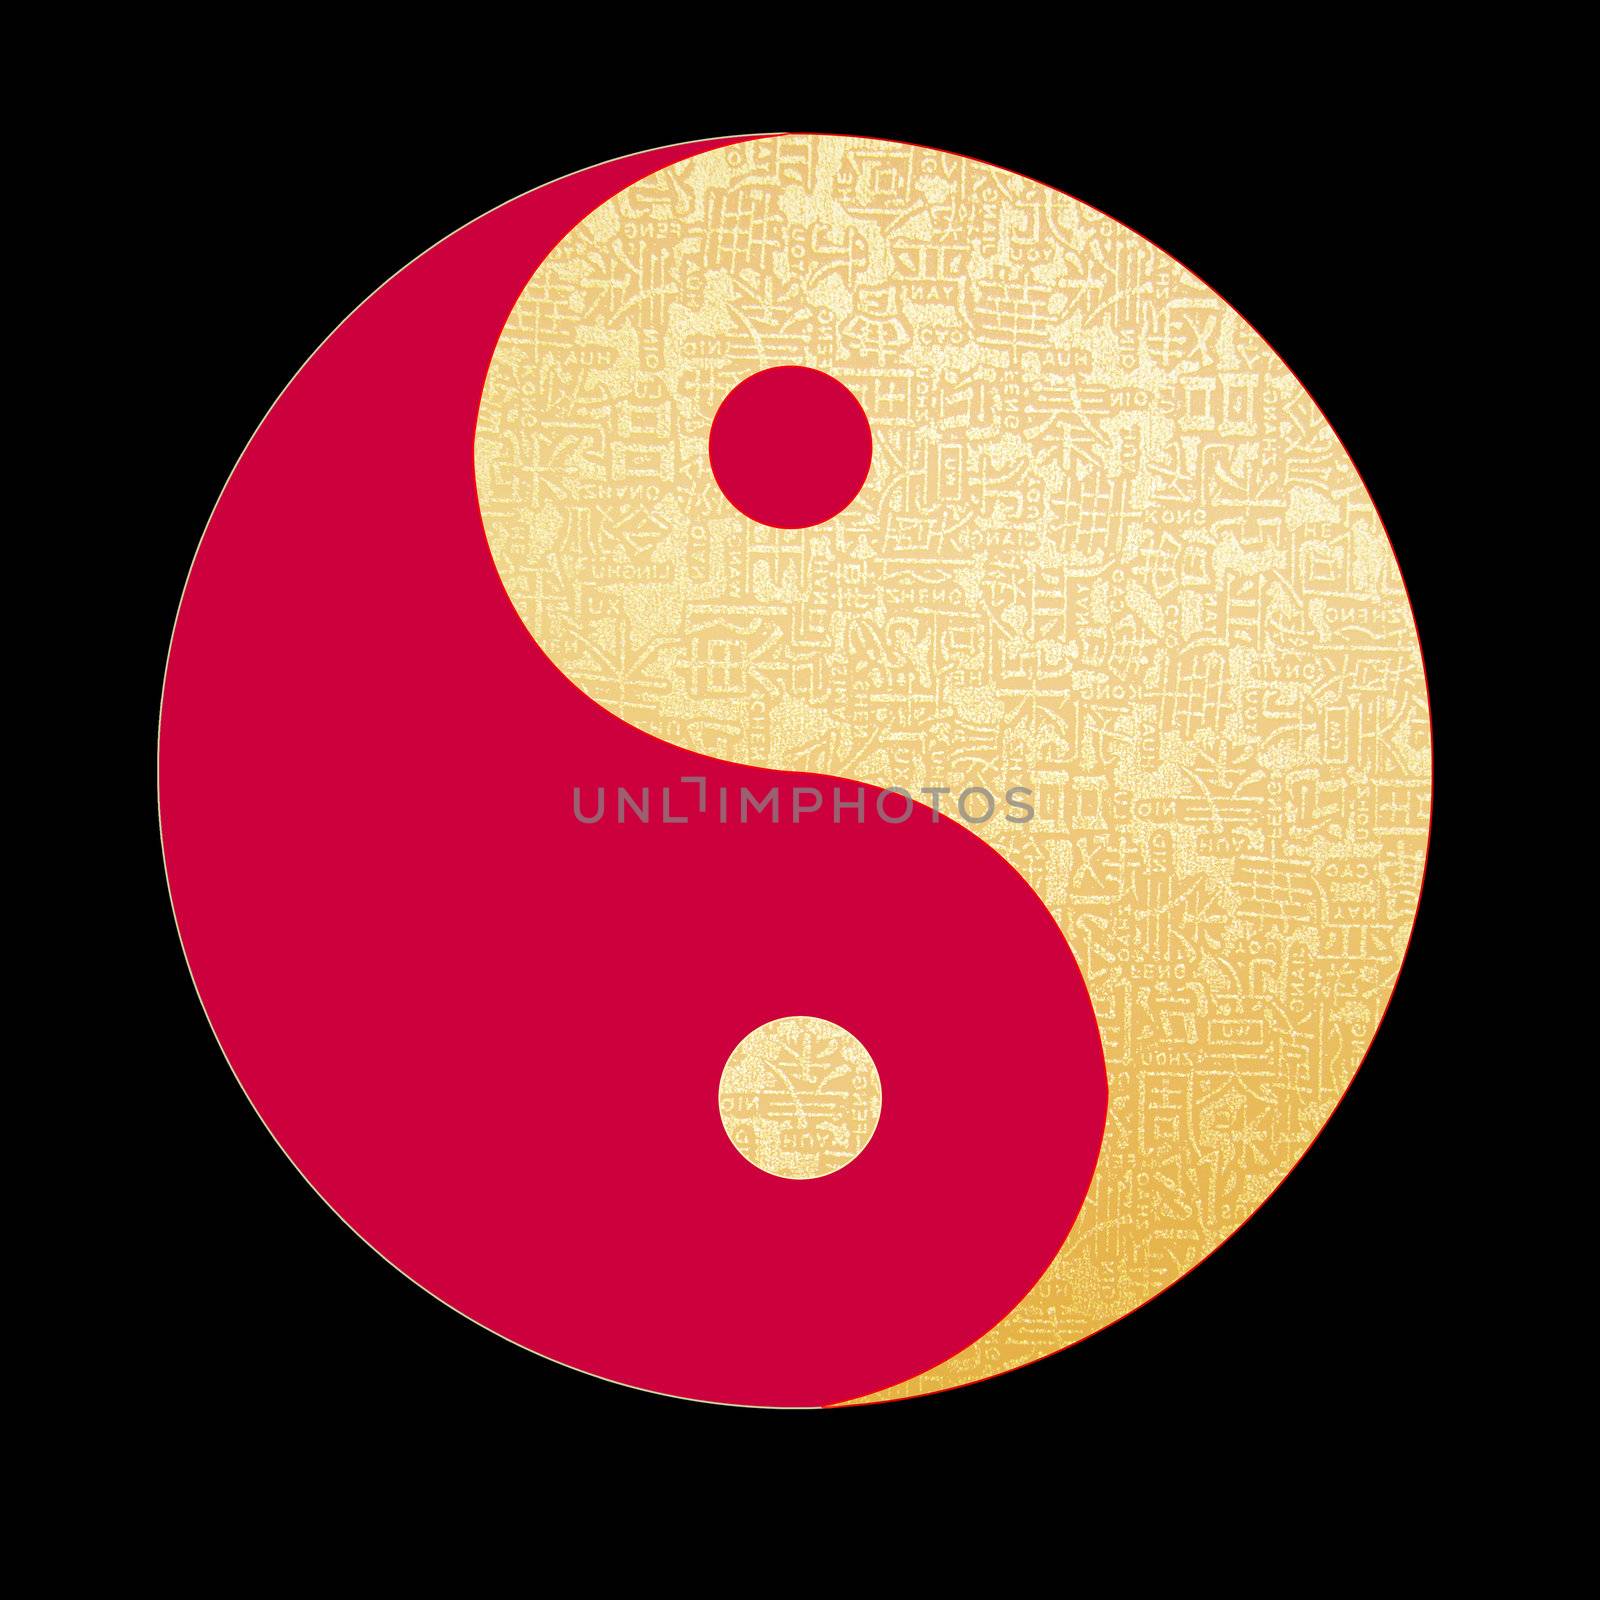 Yin-Yang symbol by Exsodus